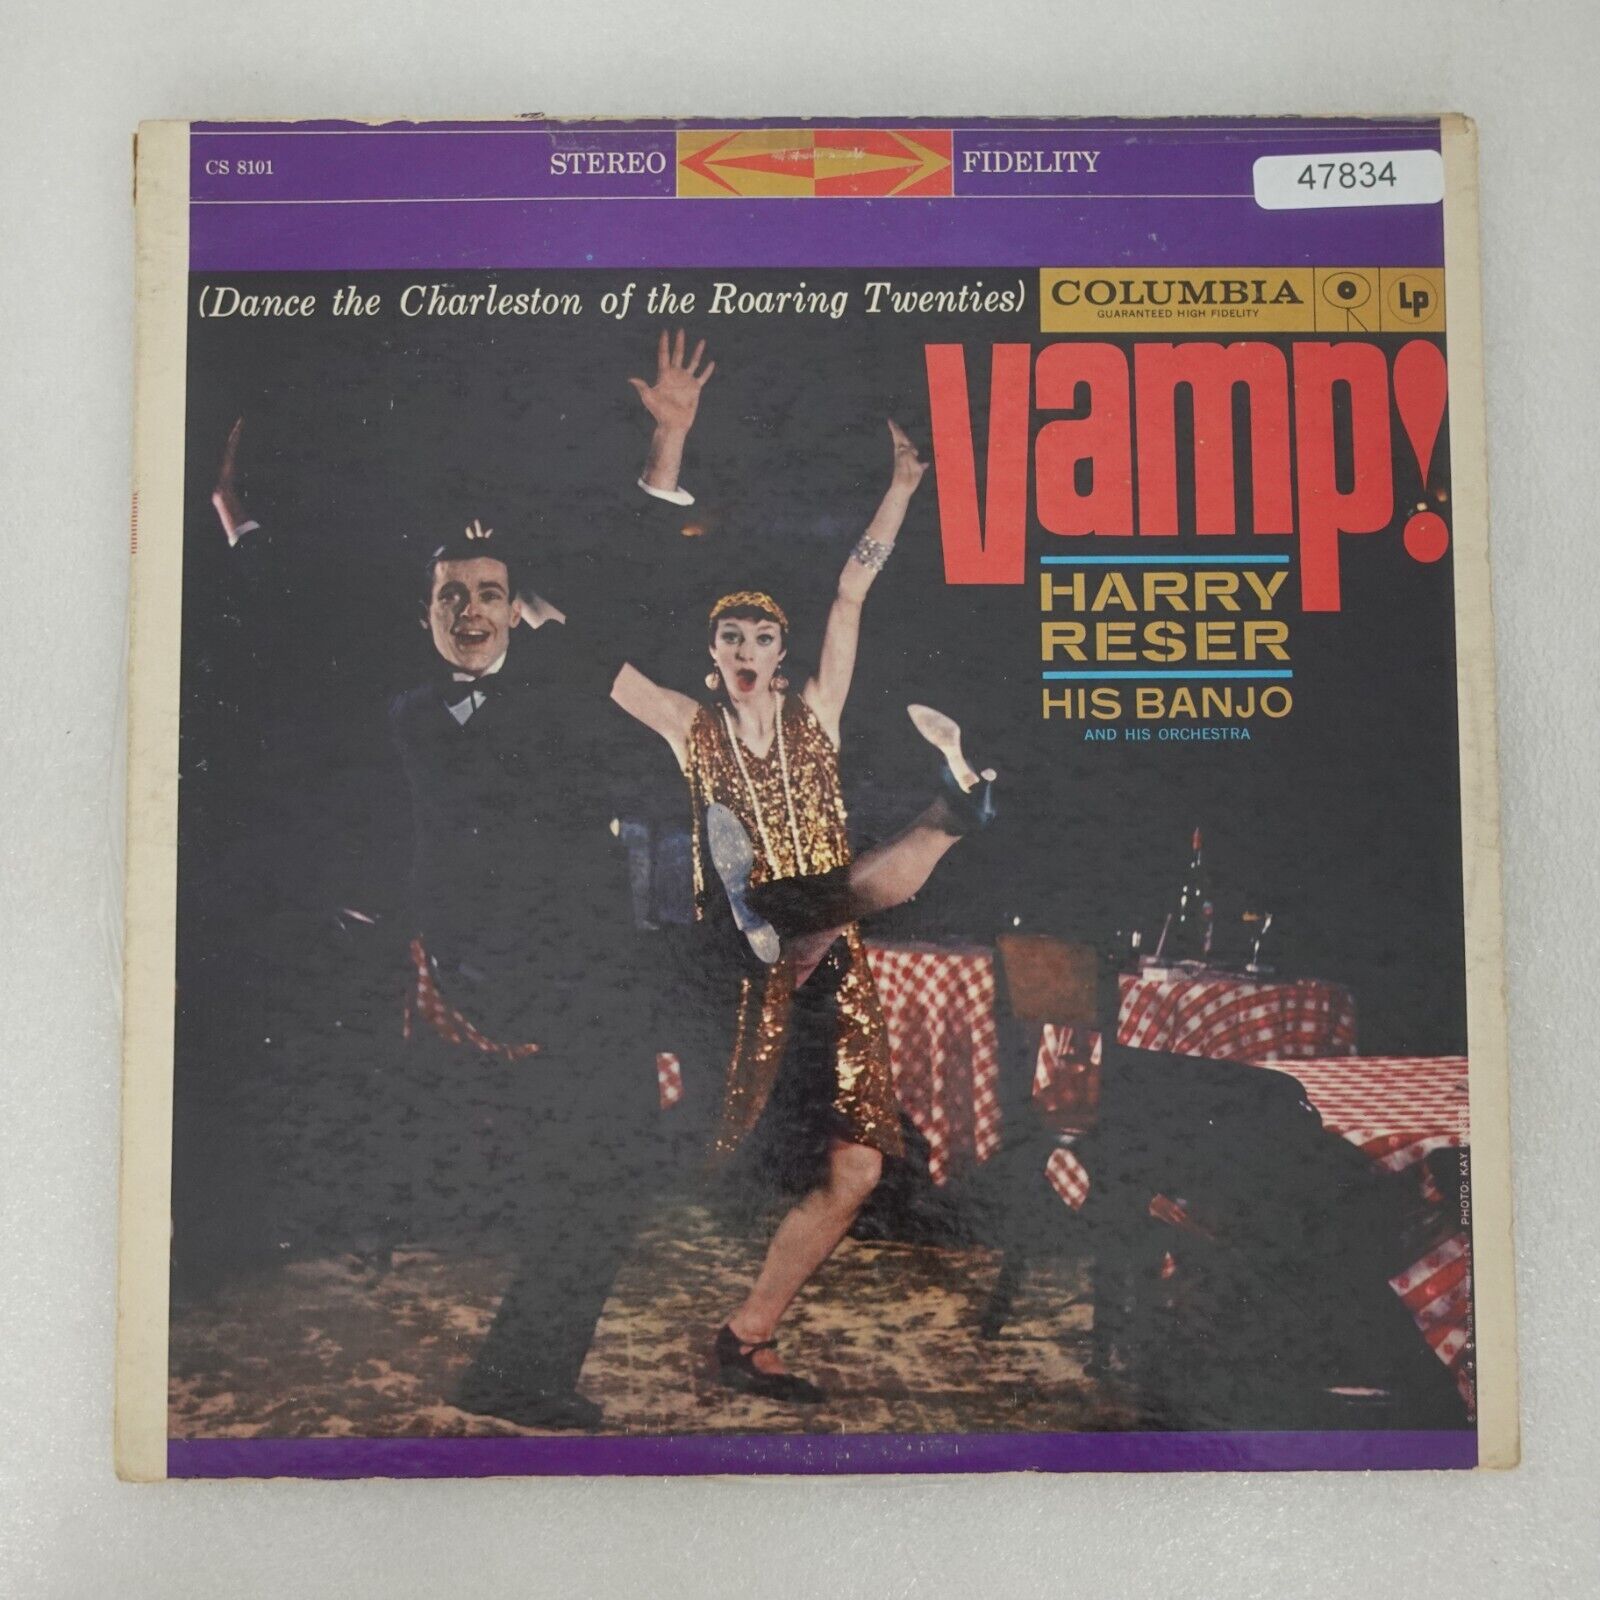 Harry Reser Vamp LP Vinyl Record Album